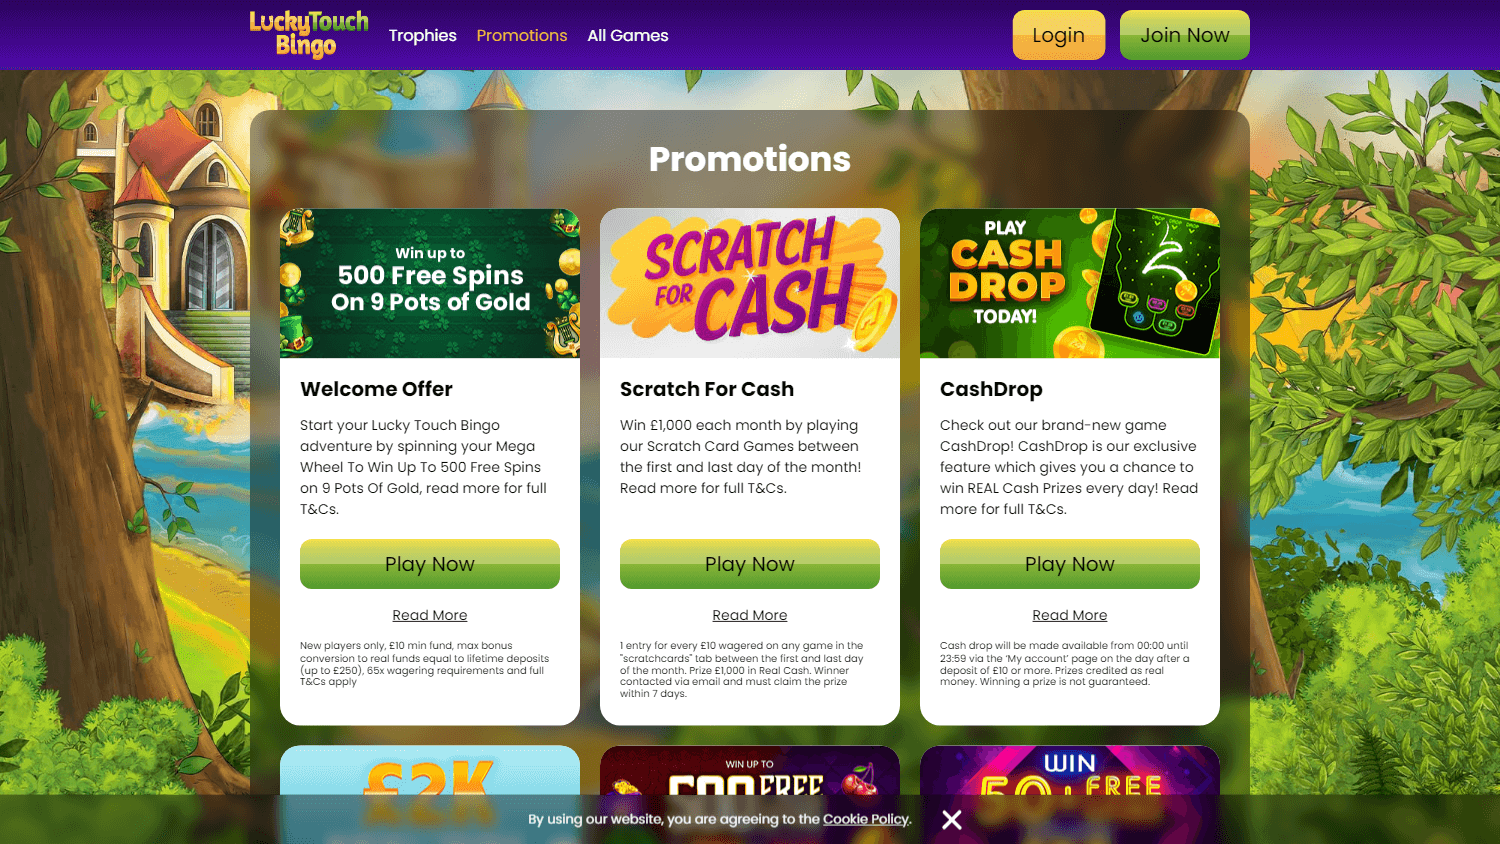 lucky_touch_bingo_casino_promotions_desktop